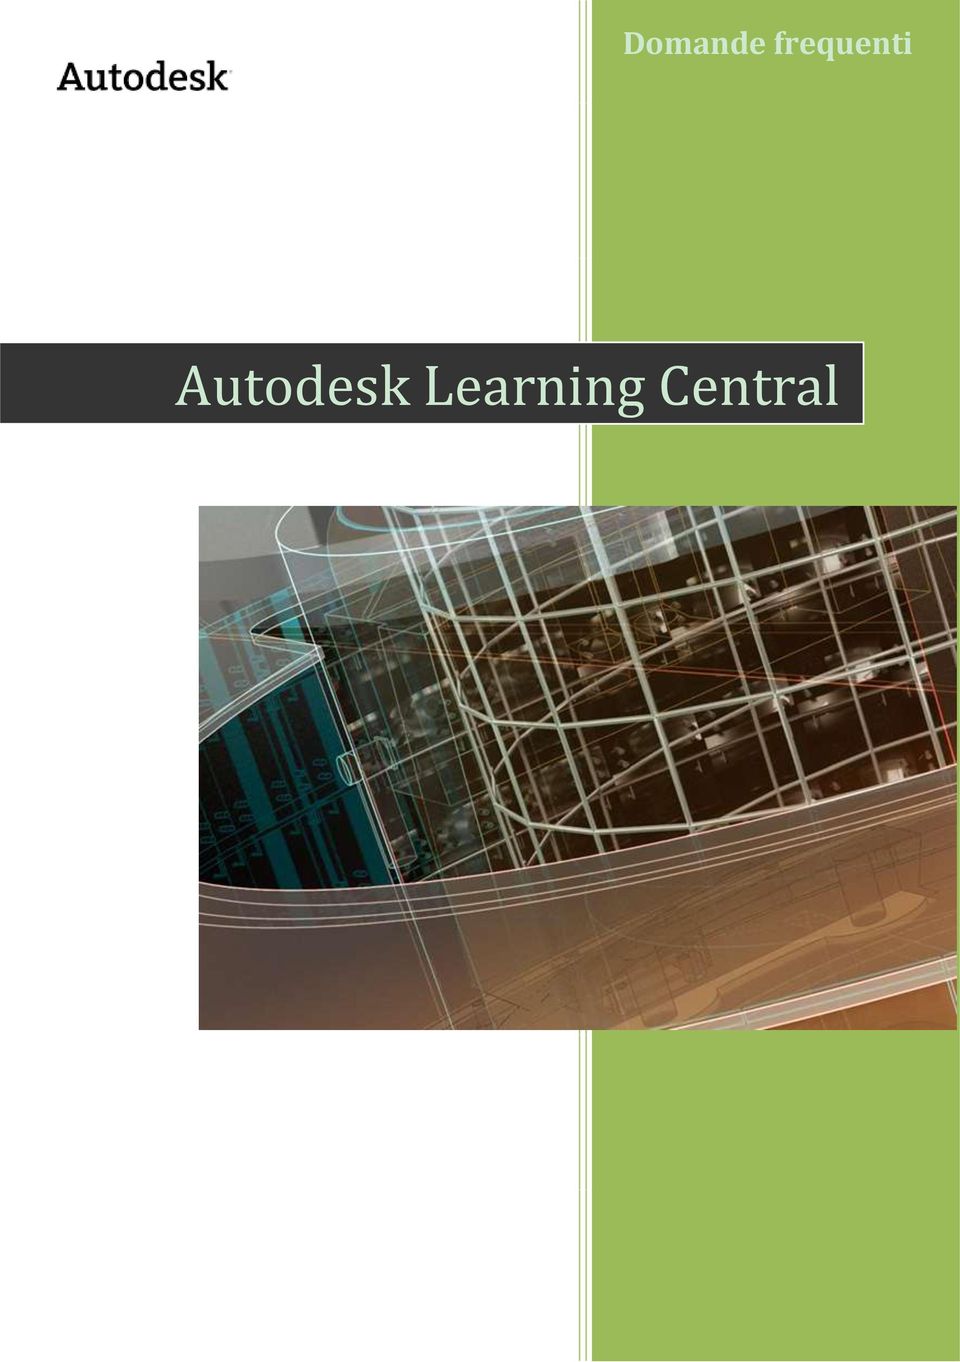 Central Autodesk,